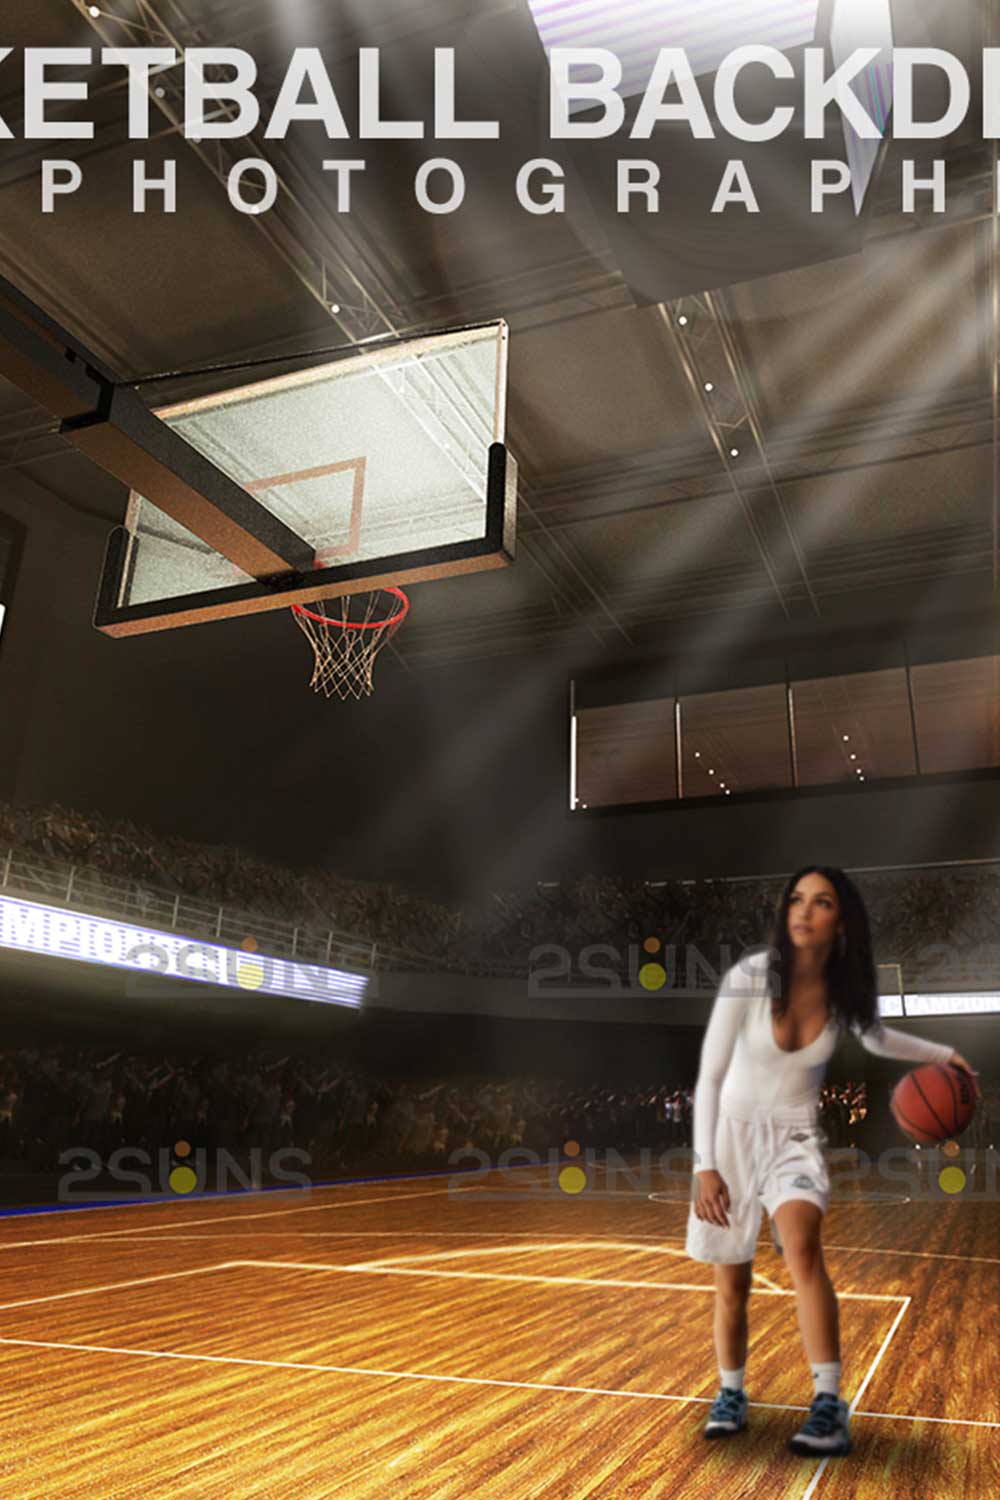 Basketball Digital Backdrop Pinterest Image.